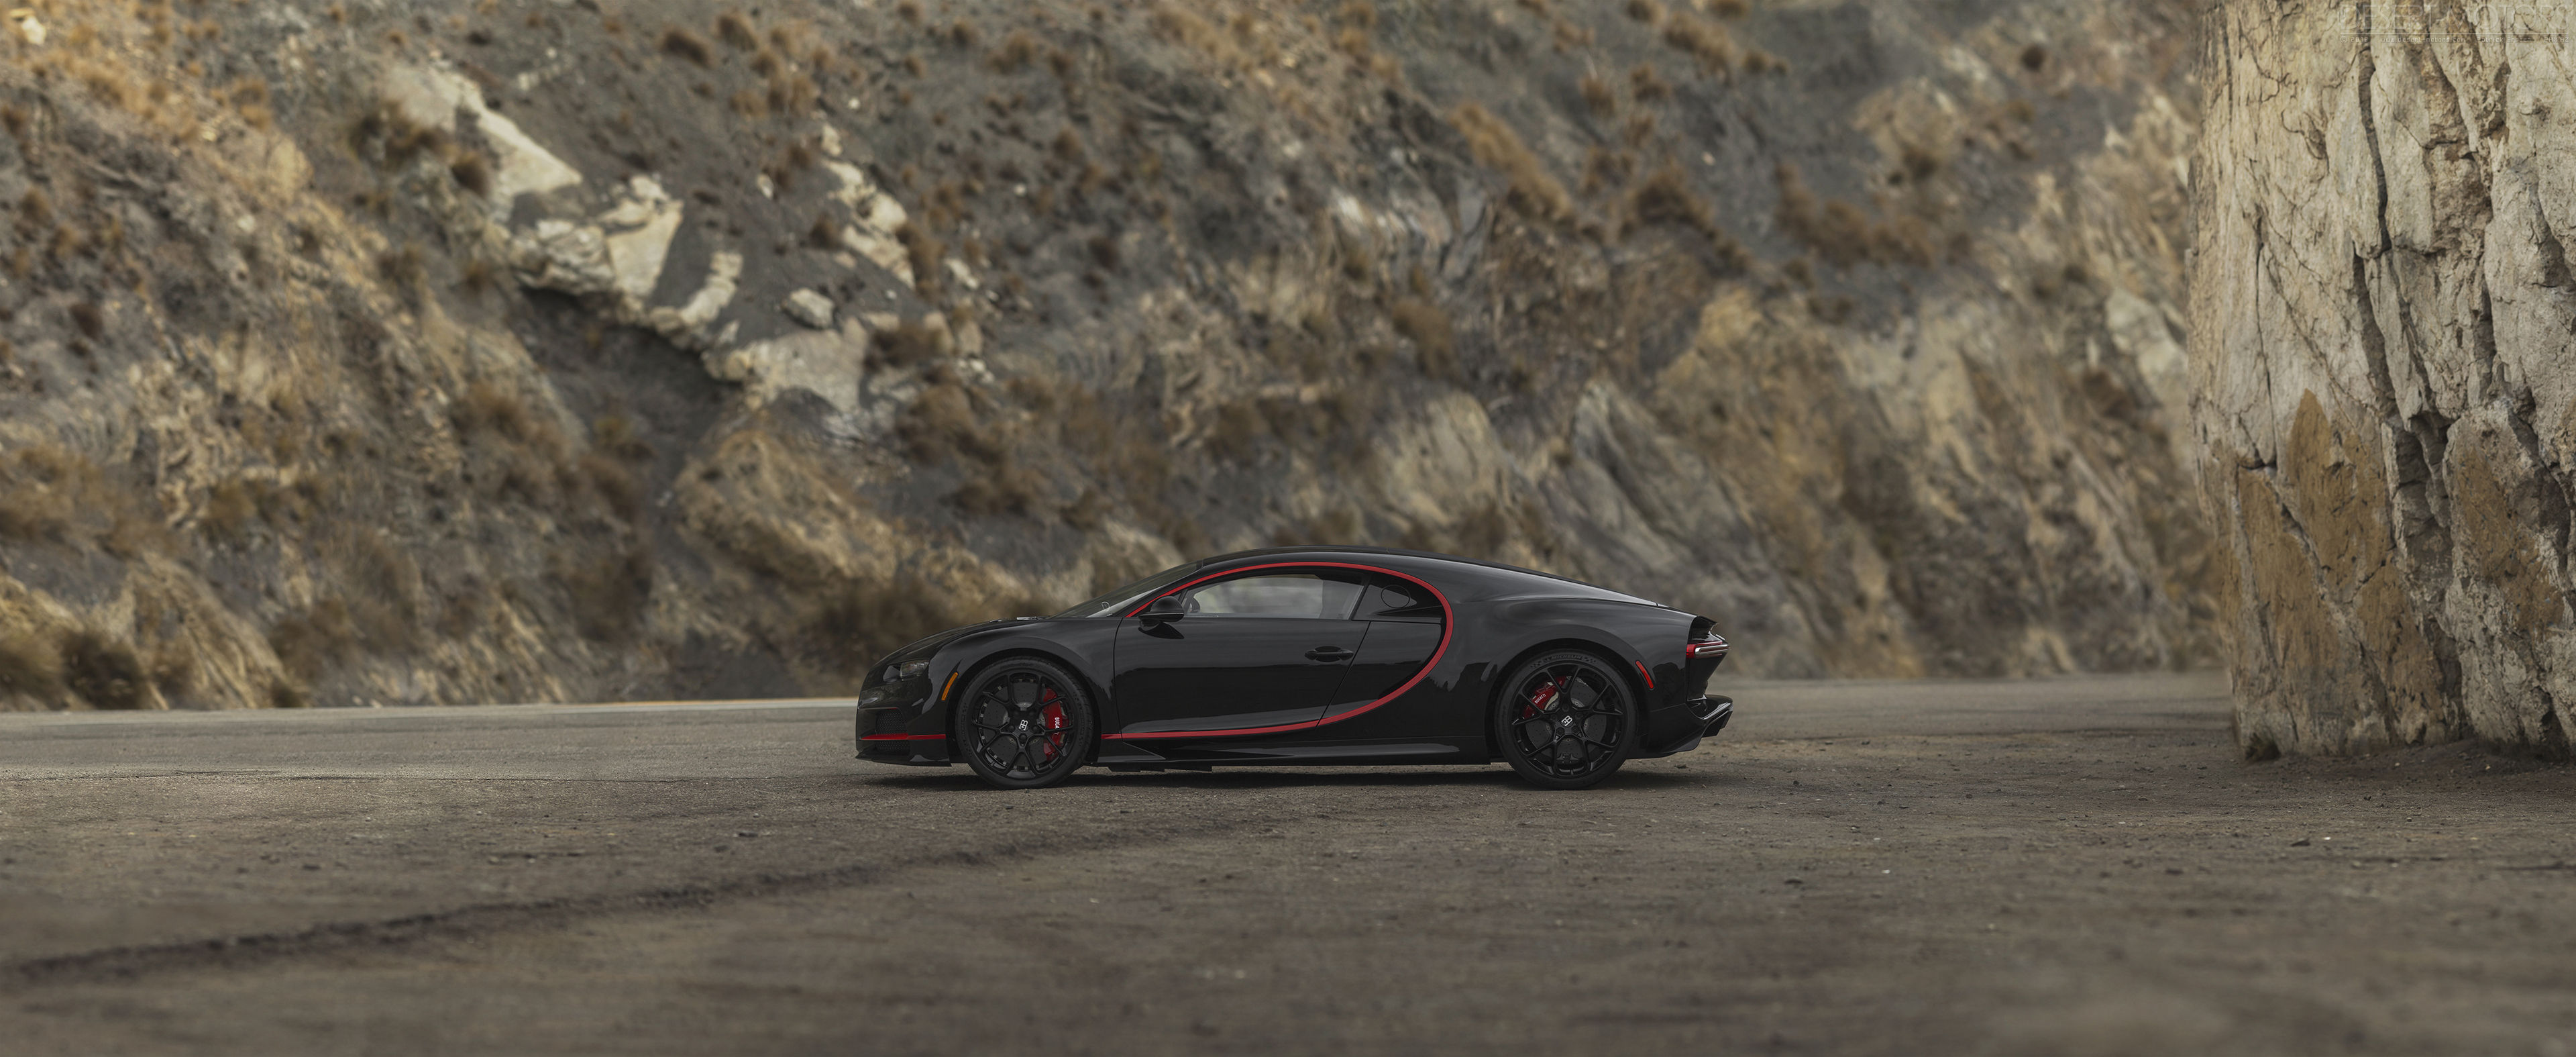 Buggati Bugatti Chiron Black Cars Hypercar Rocks Wall 3840x1575